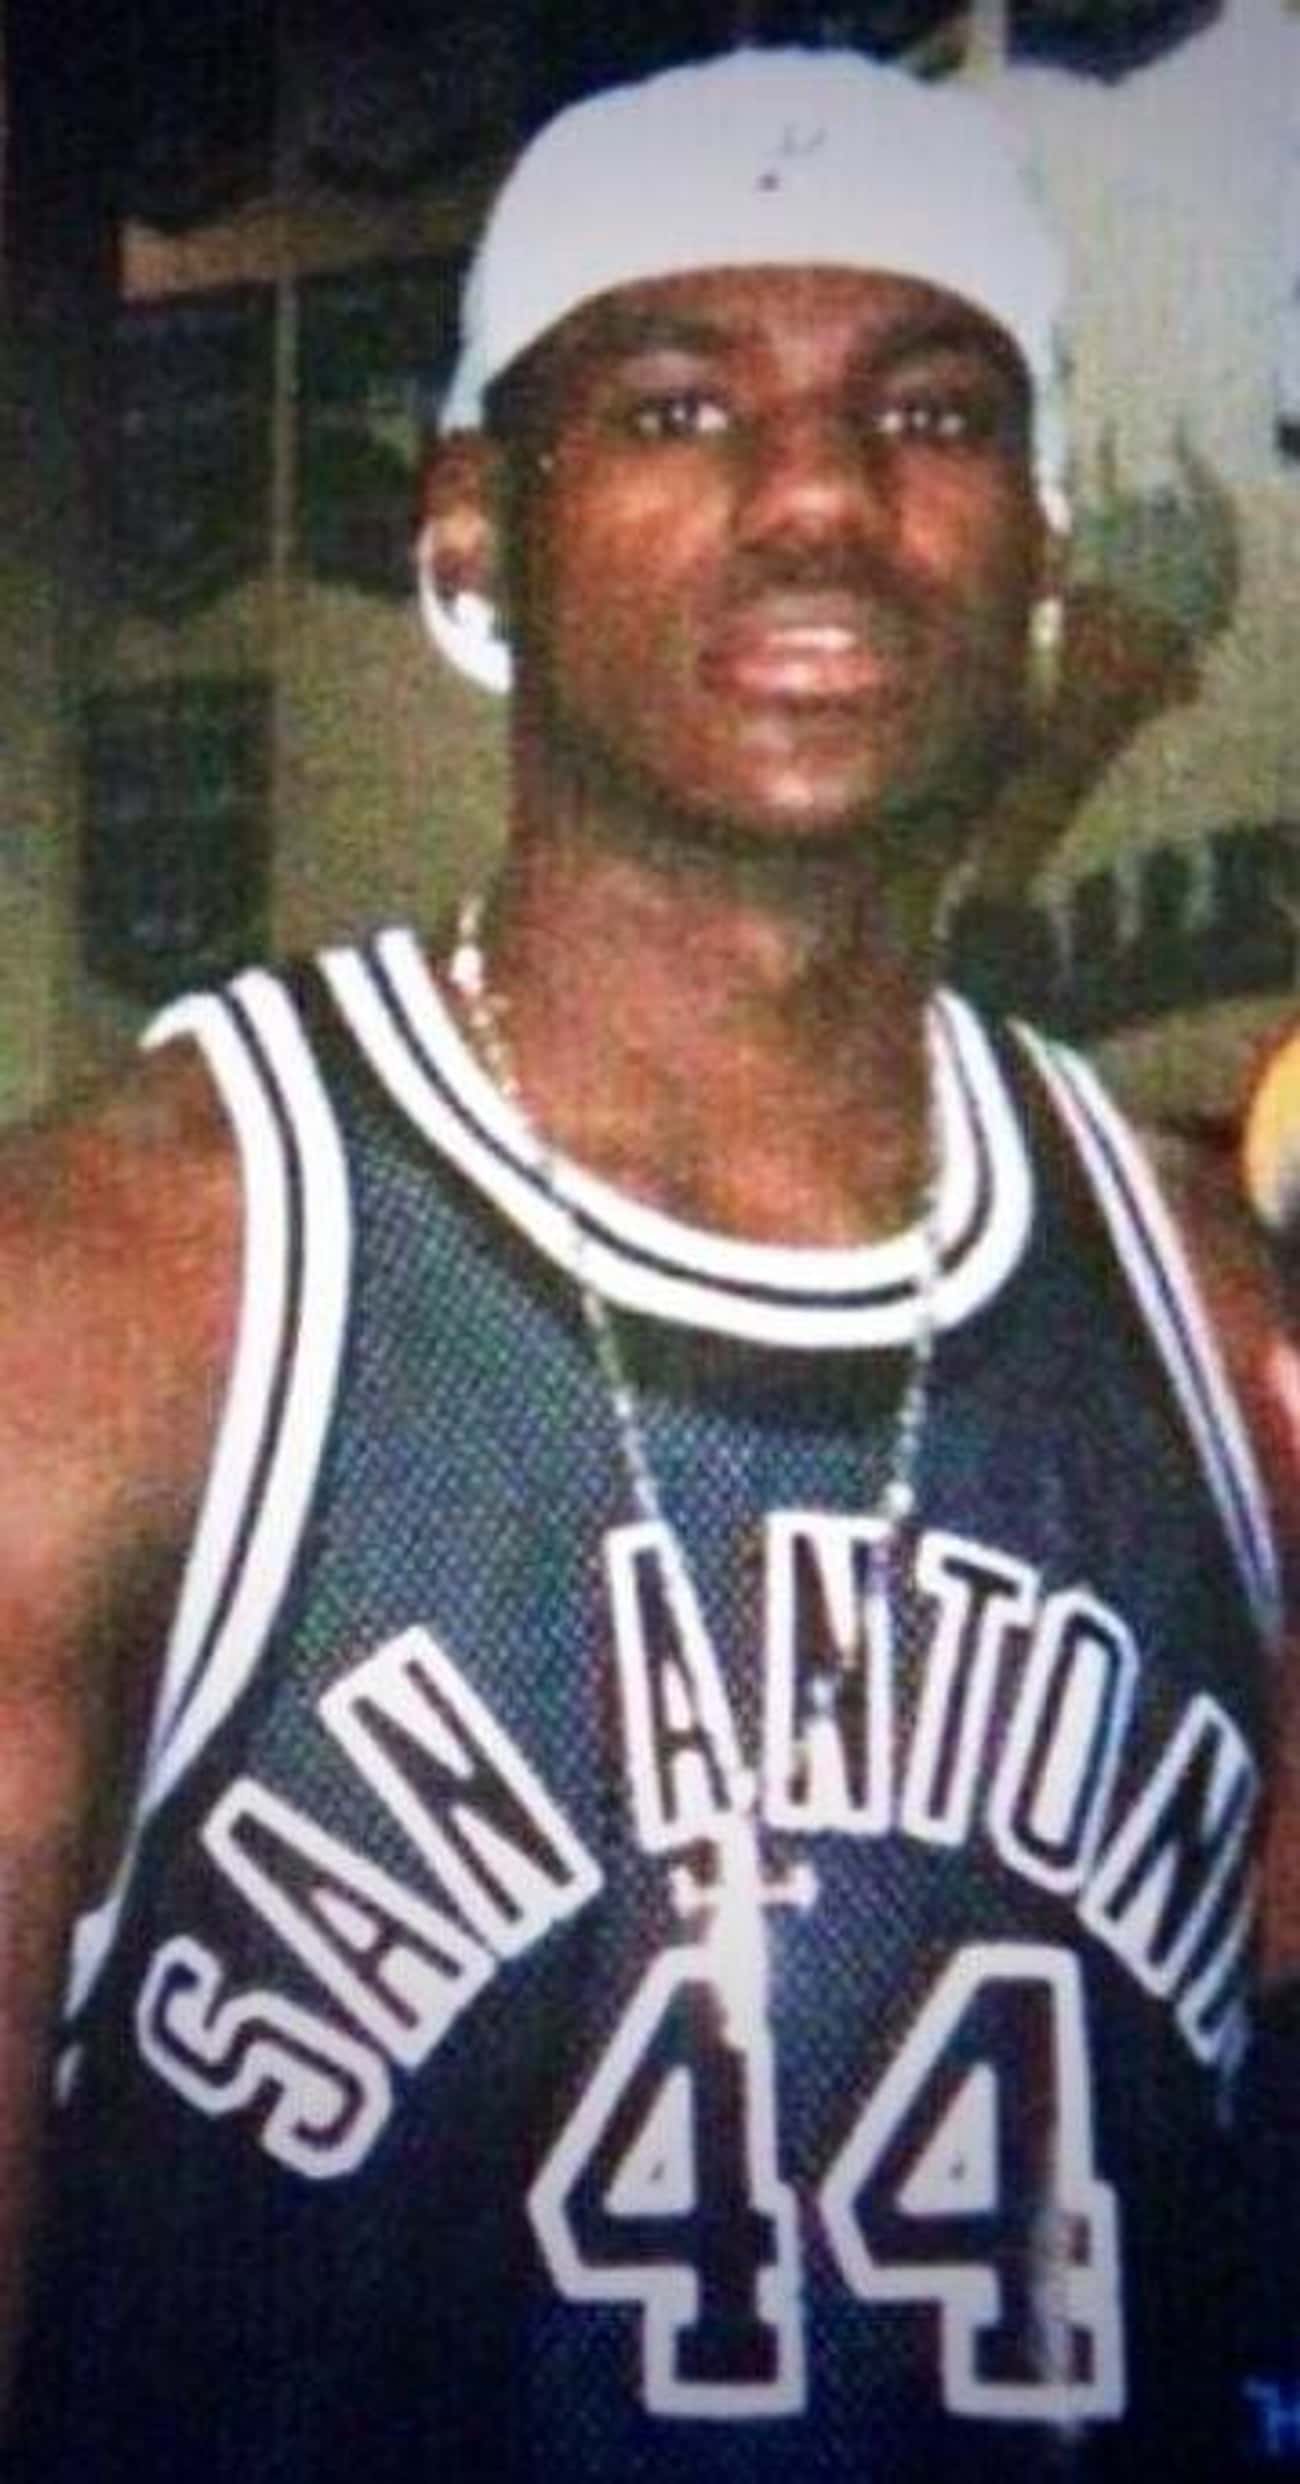 Young LeBron James Wearing San Antonio Spurs Jersey